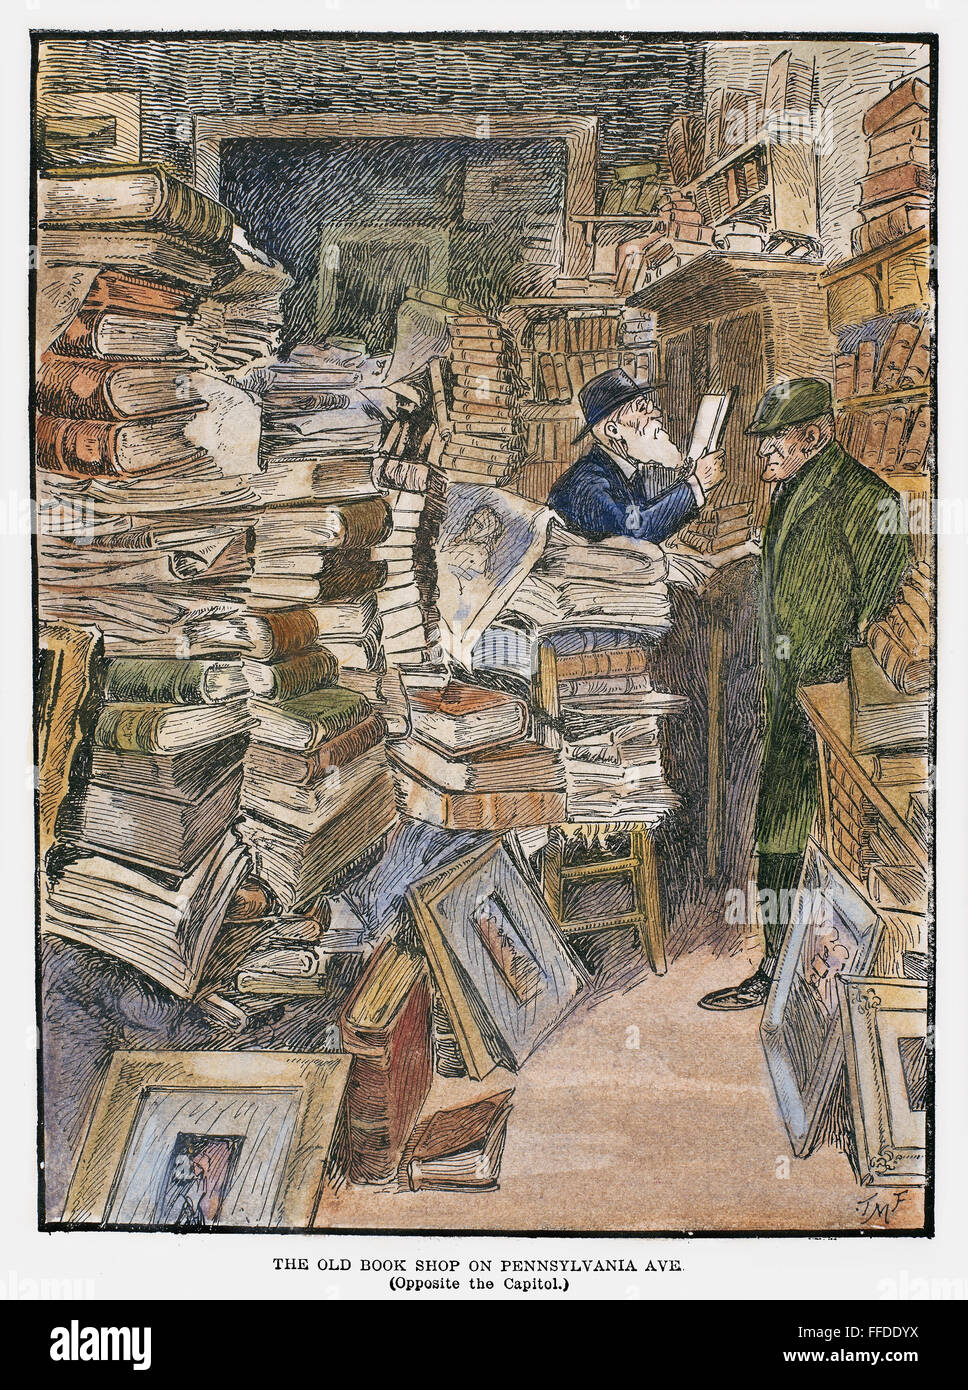 BOOKSHOP, 1902. /nInterior of an old bookshop on Pennsylvania Avenue, Washington, D.C. Drawing, 1902, by Thomas Fleming. Stock Photo